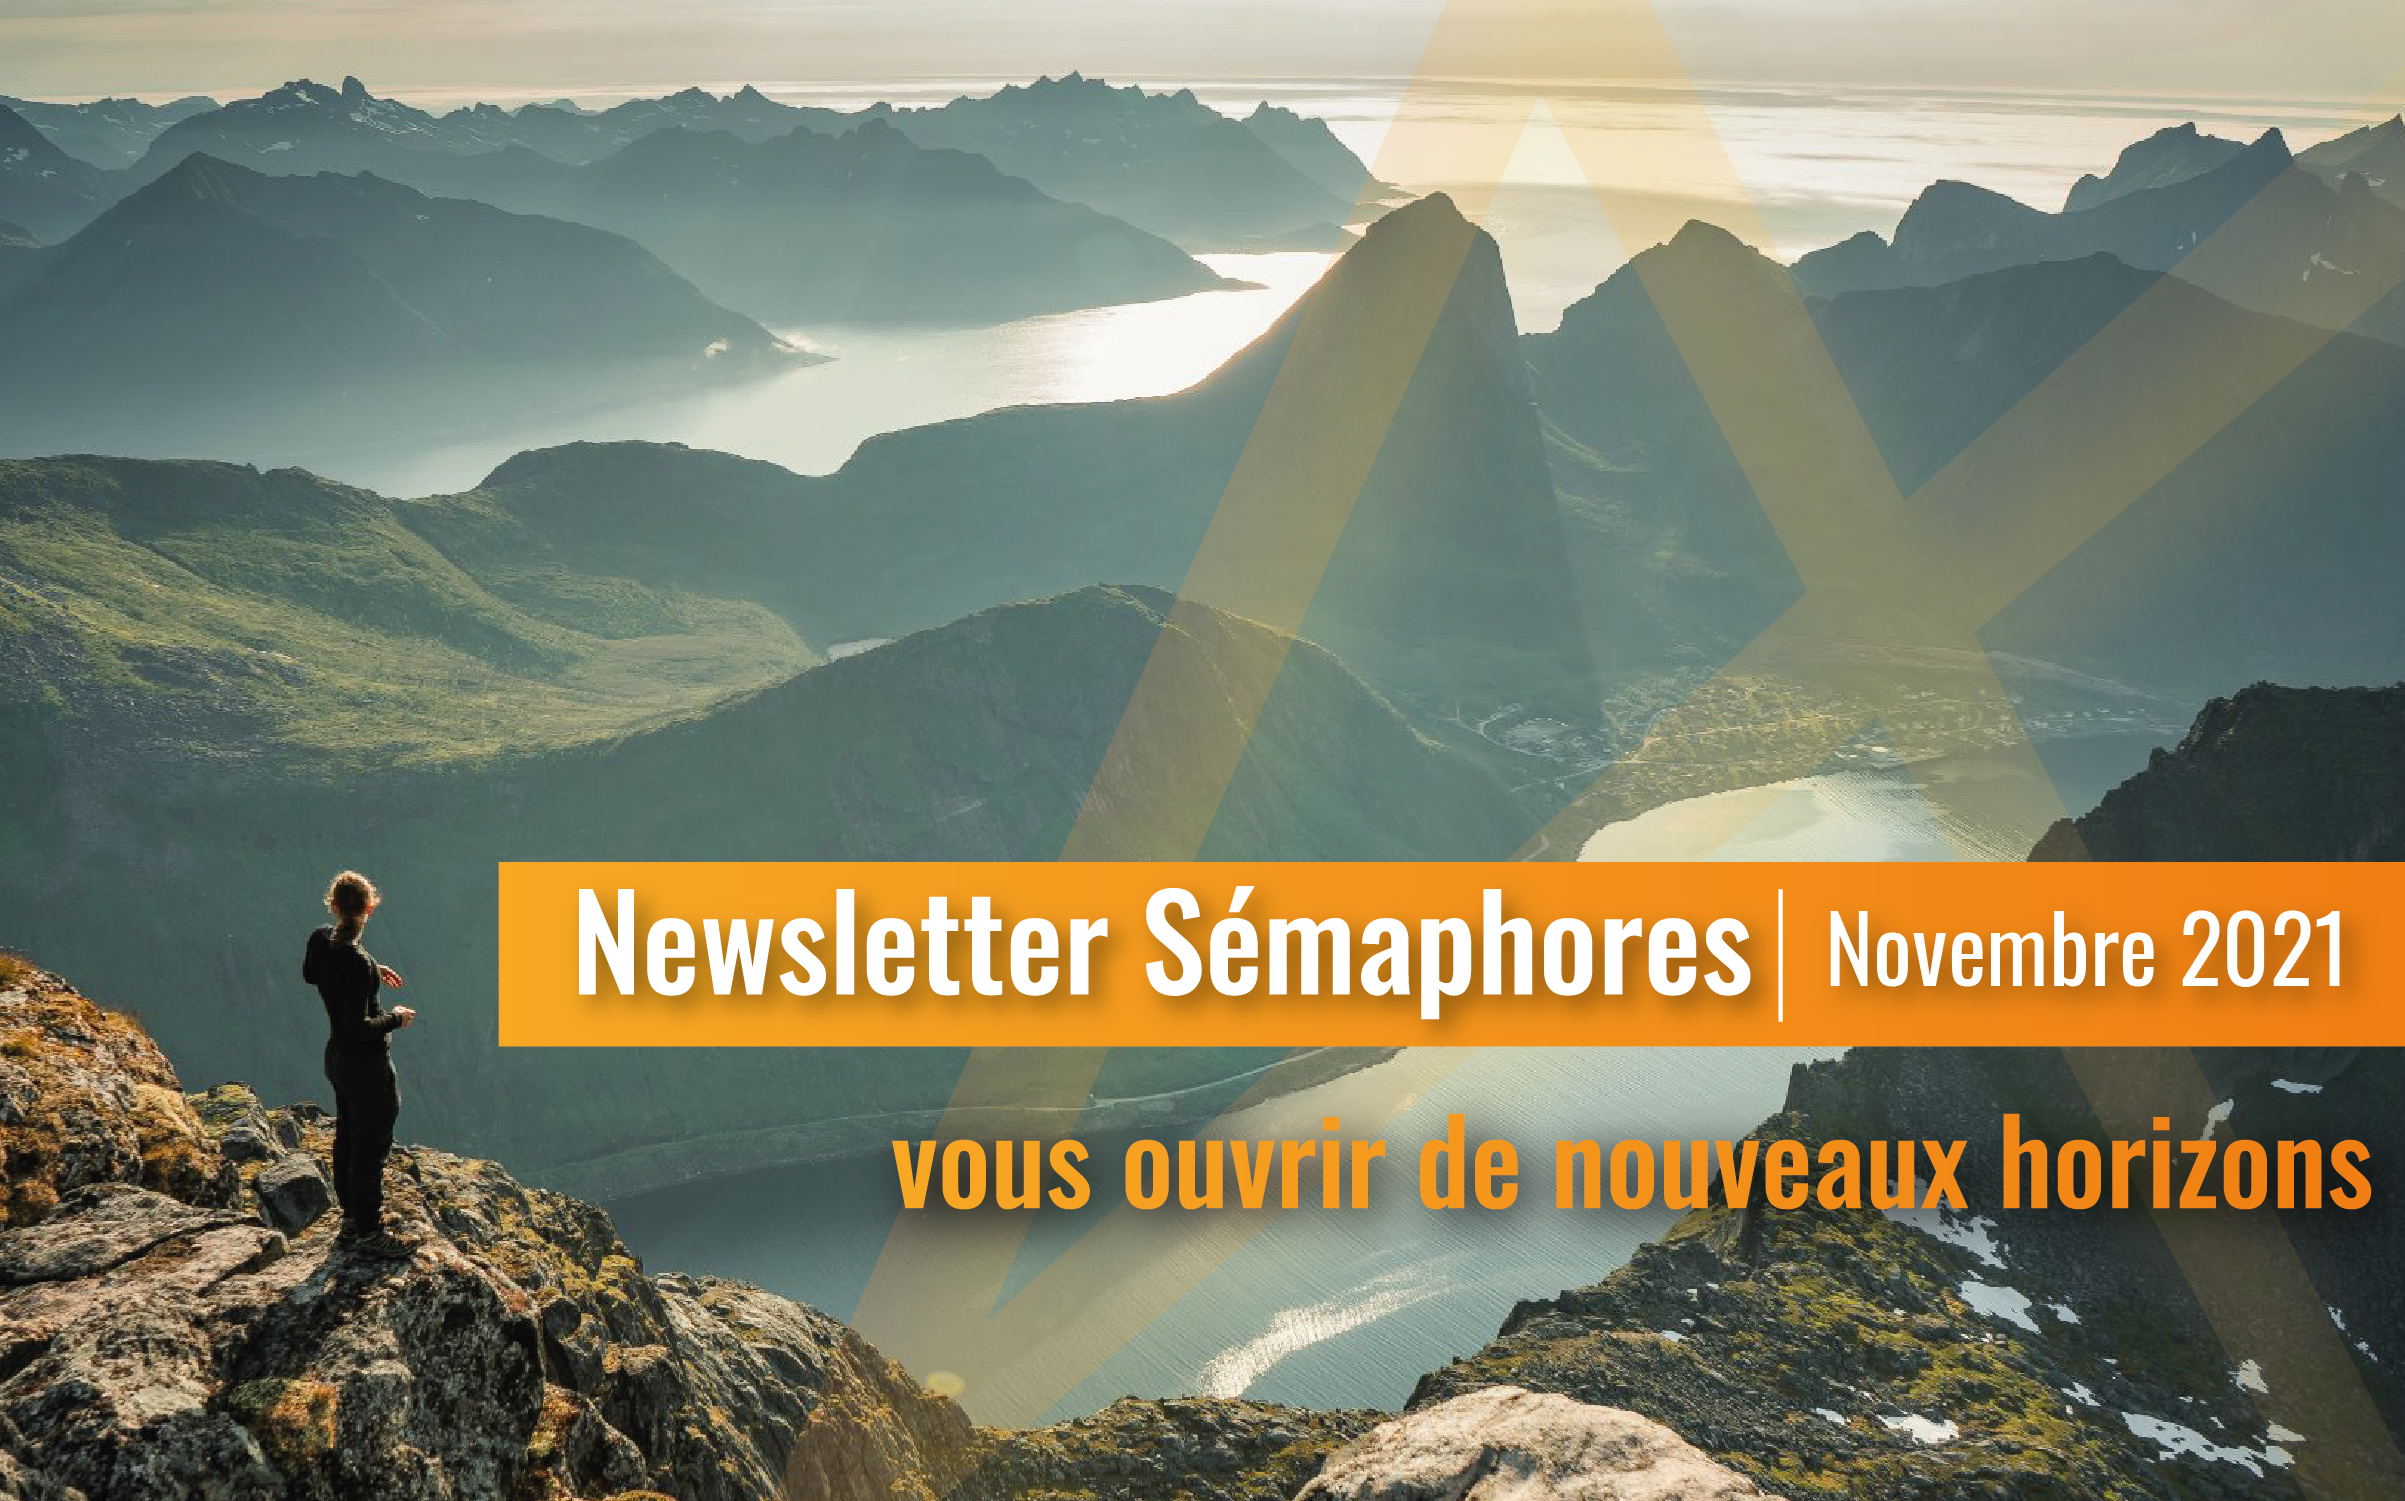 La newsletter Sémaphores - Novembre 2021